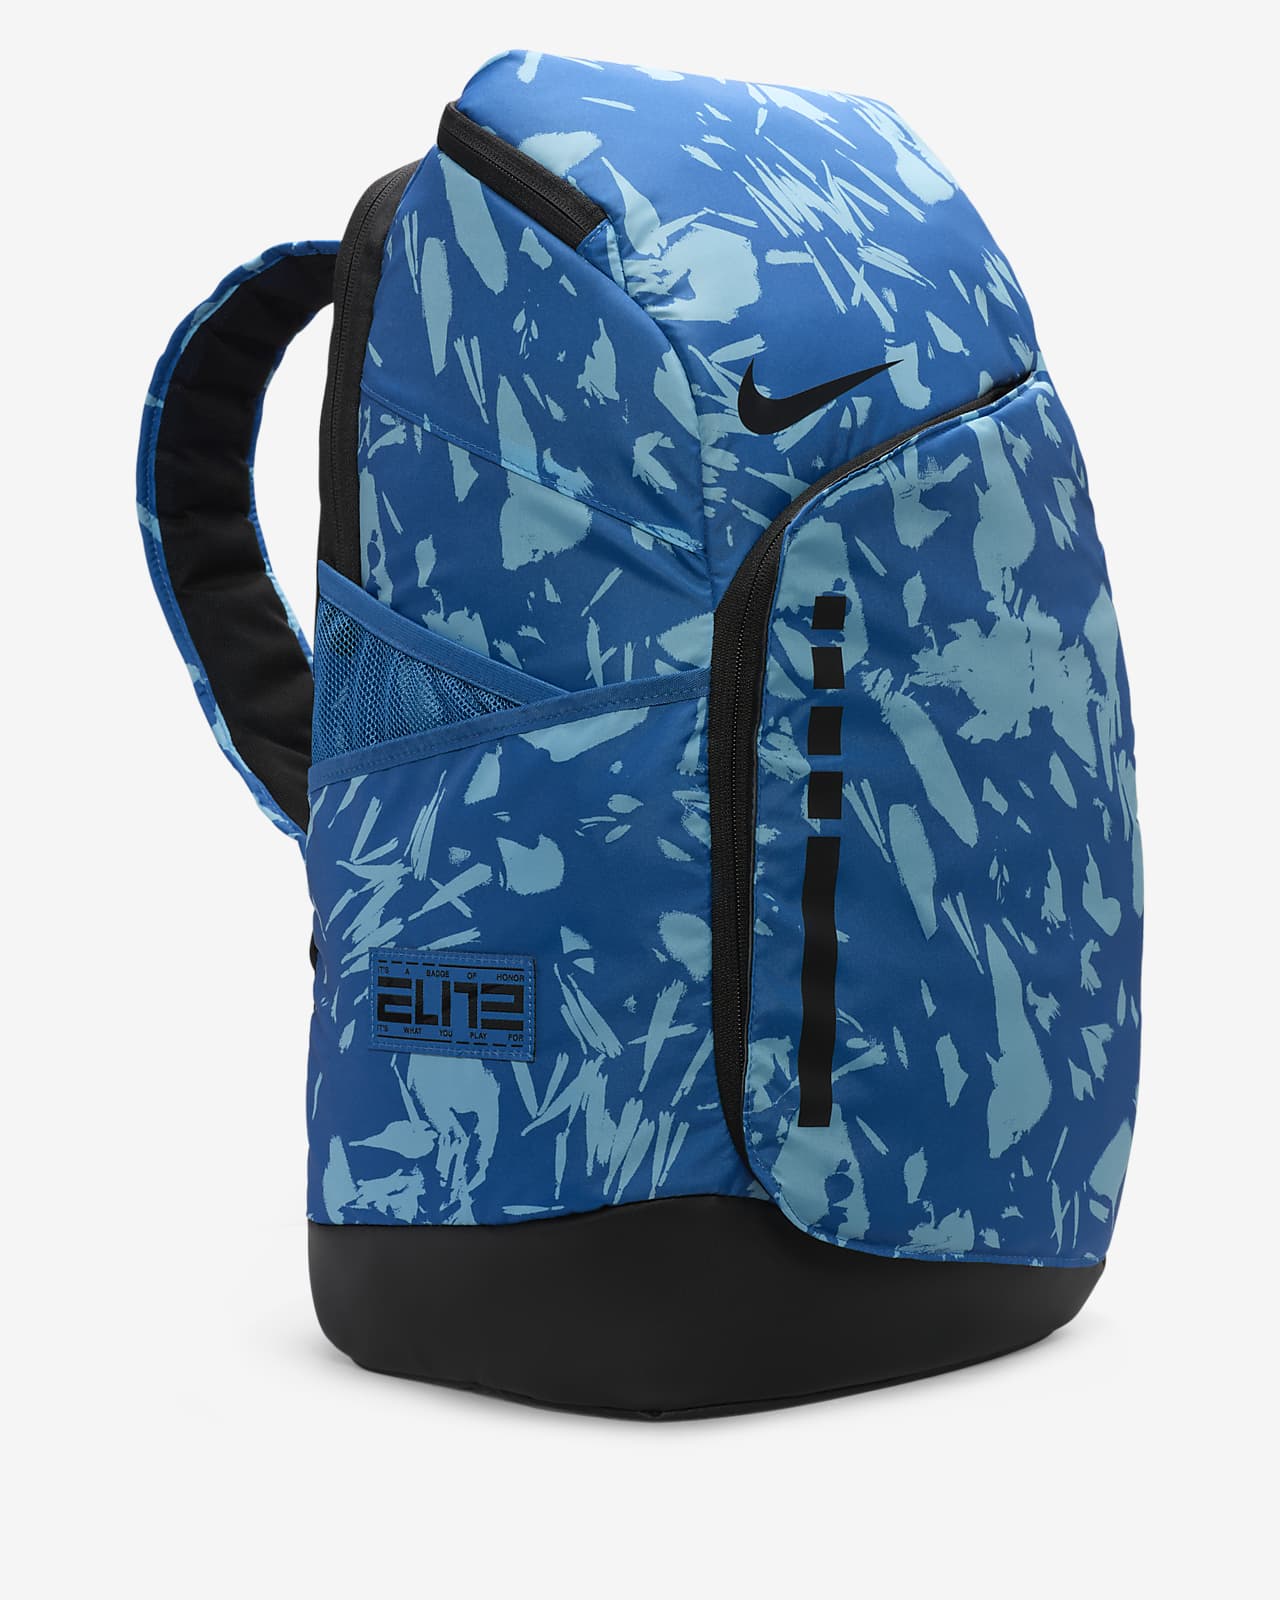 Buy Nike 25 Ltrs Industrial Blue/Black/Black School Backpack (BA4863-457)  at Amazon.in